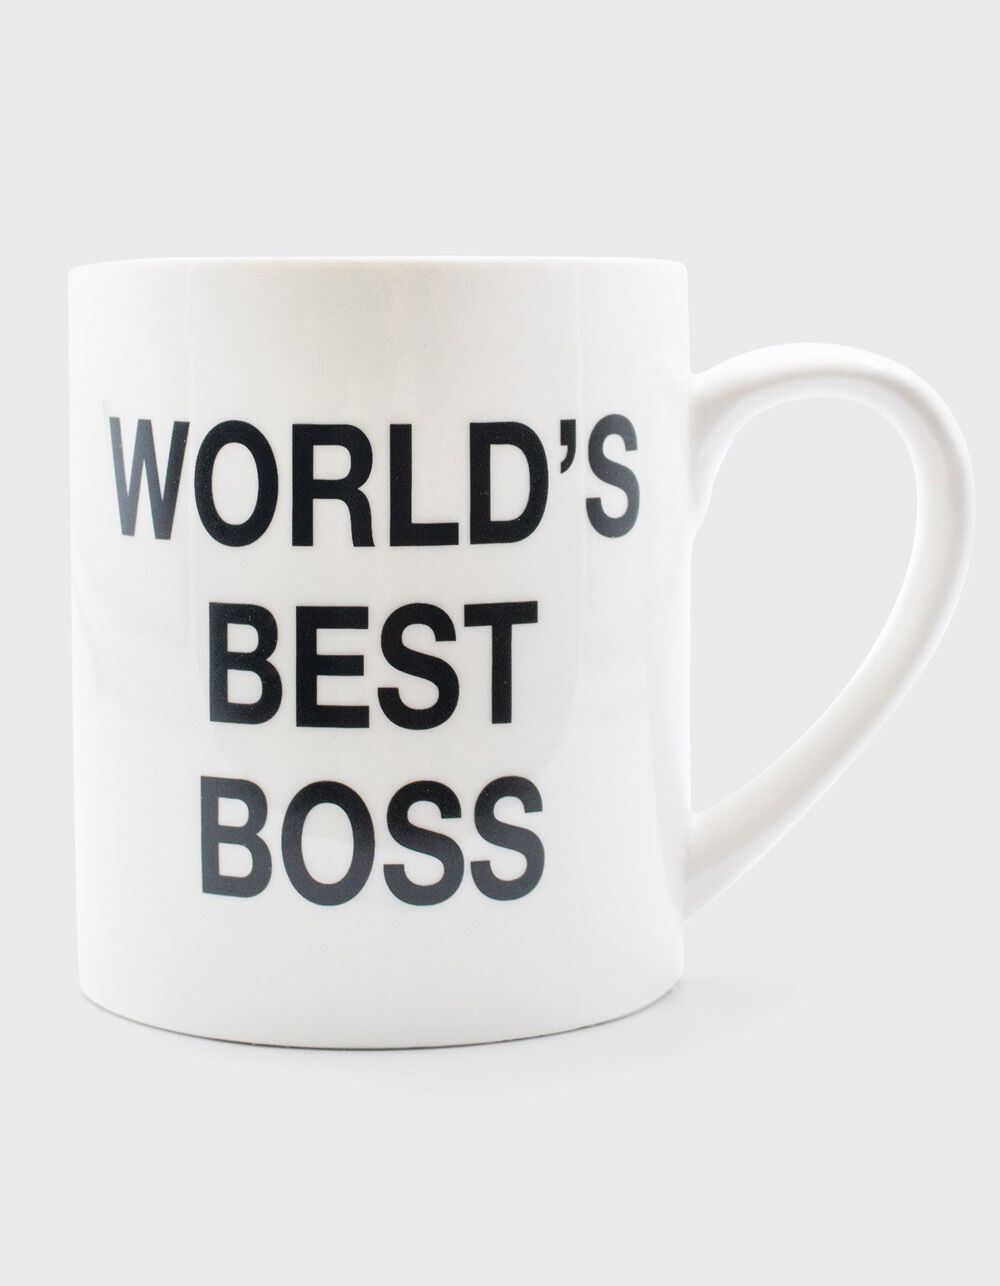 Culture Fly The Office World's Best Boss Mug